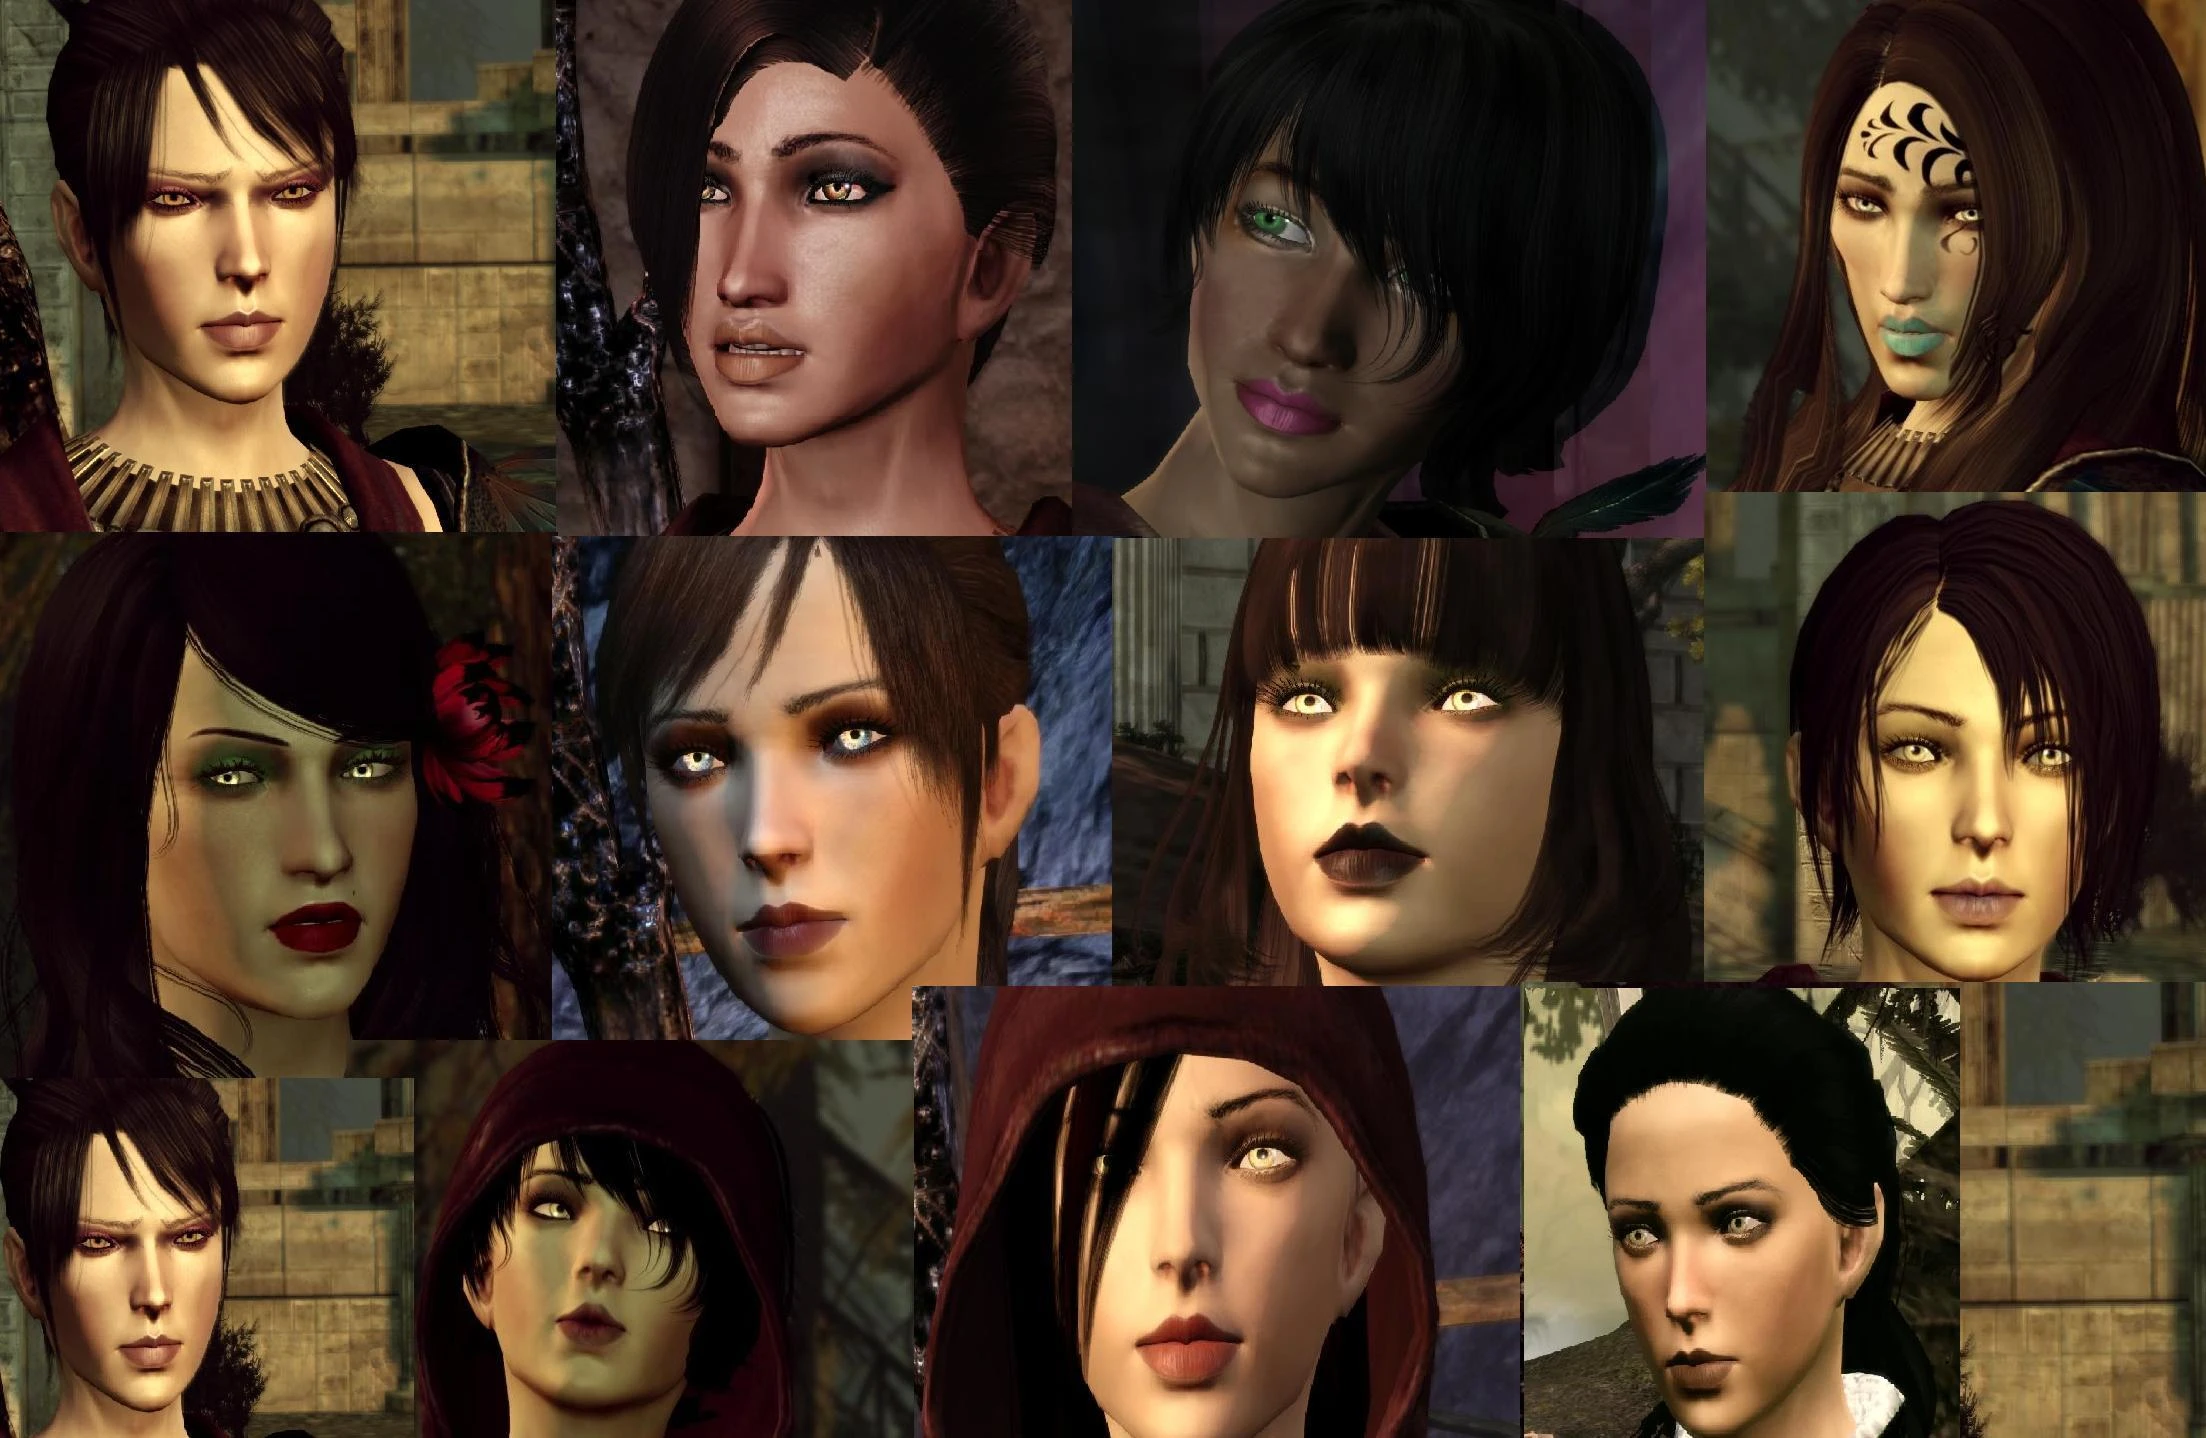 Many faces of Morrigan.